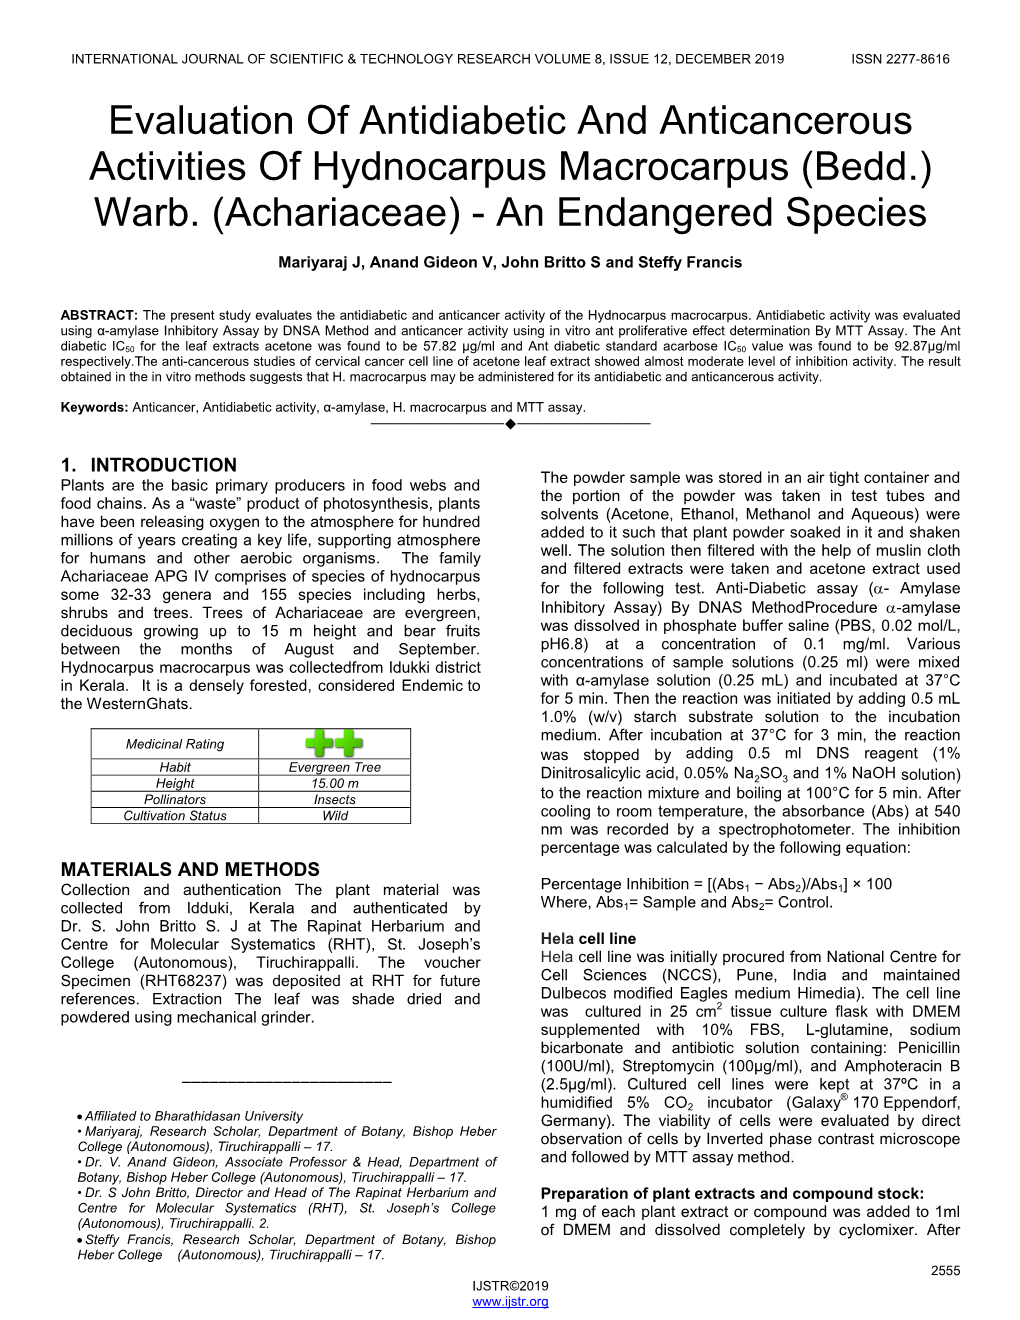 Evaluation of Antidiabetic and Anticancerous Activities of Hydnocarpus Macrocarpus (Bedd.) Warb